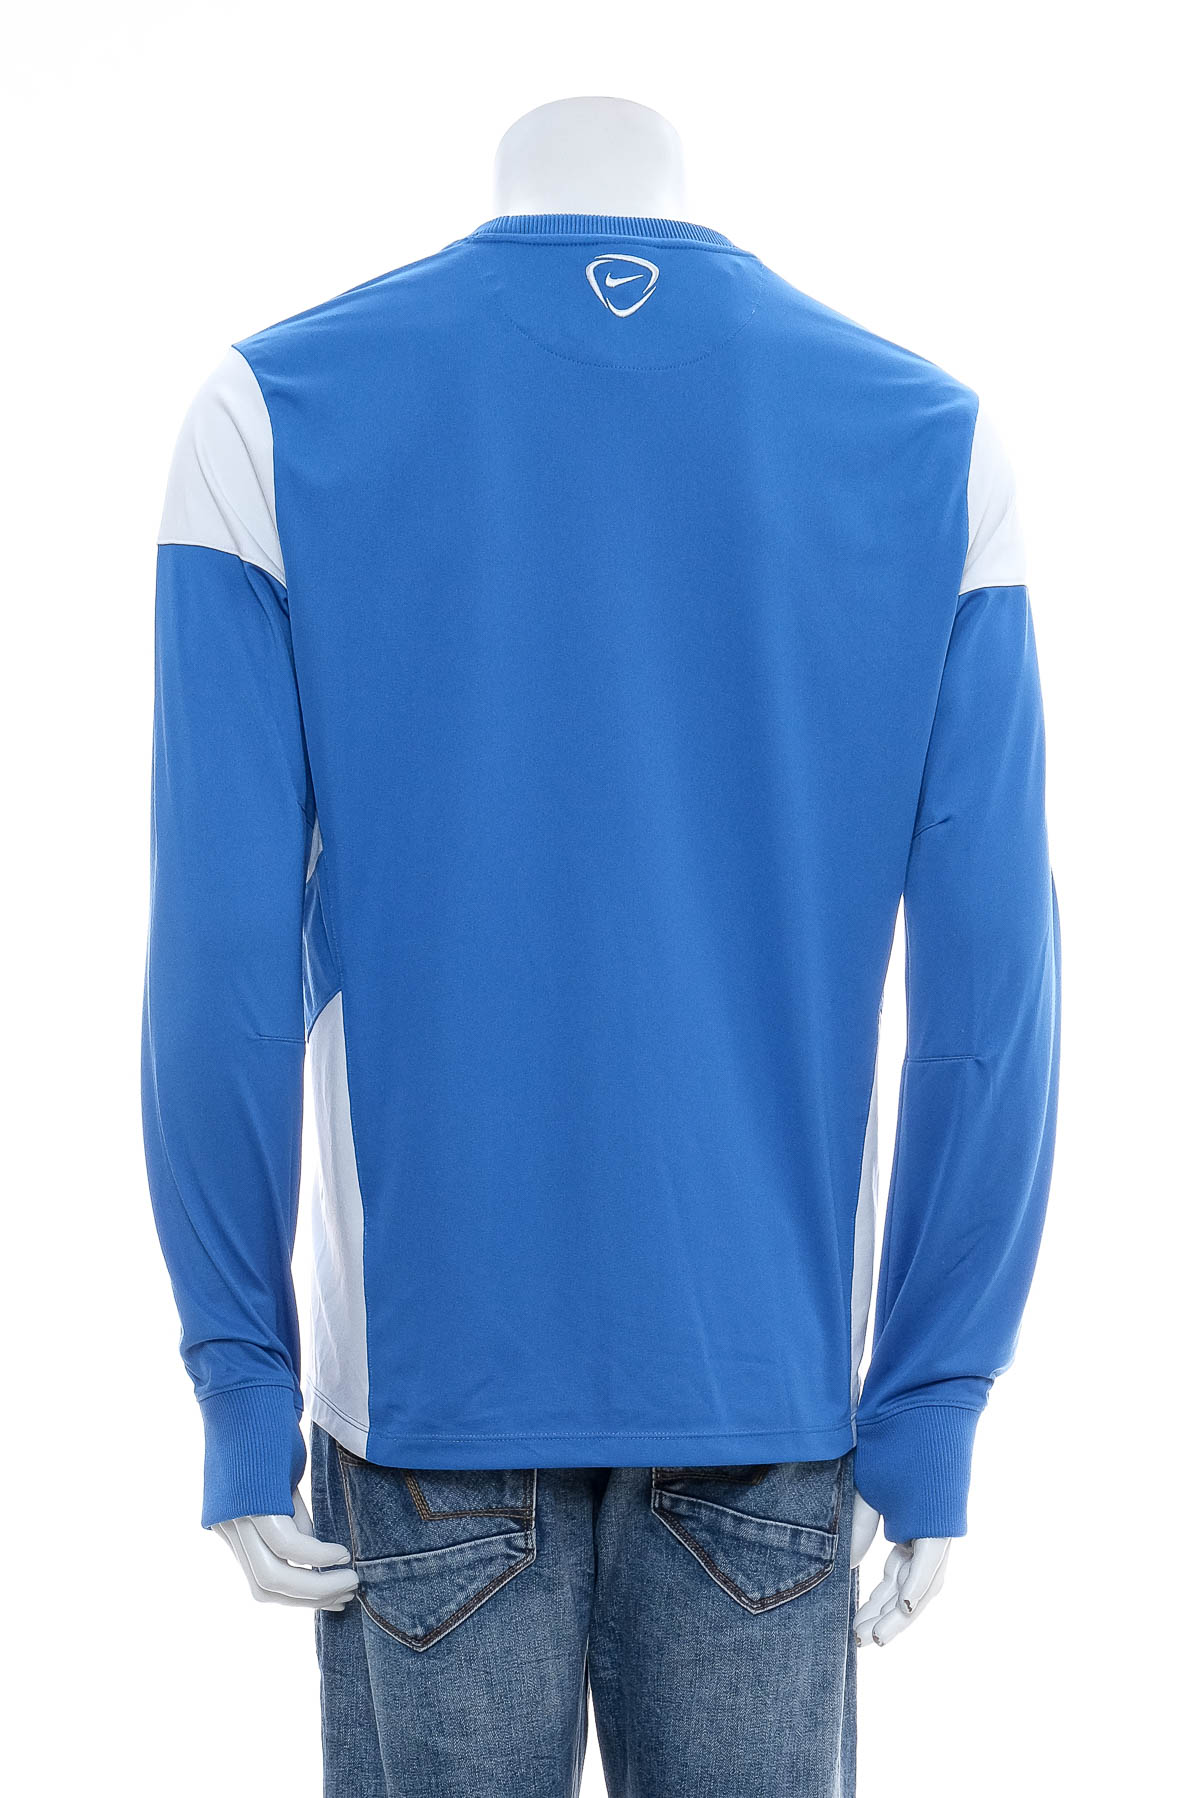 Men's sport blouse - NIKE - 1